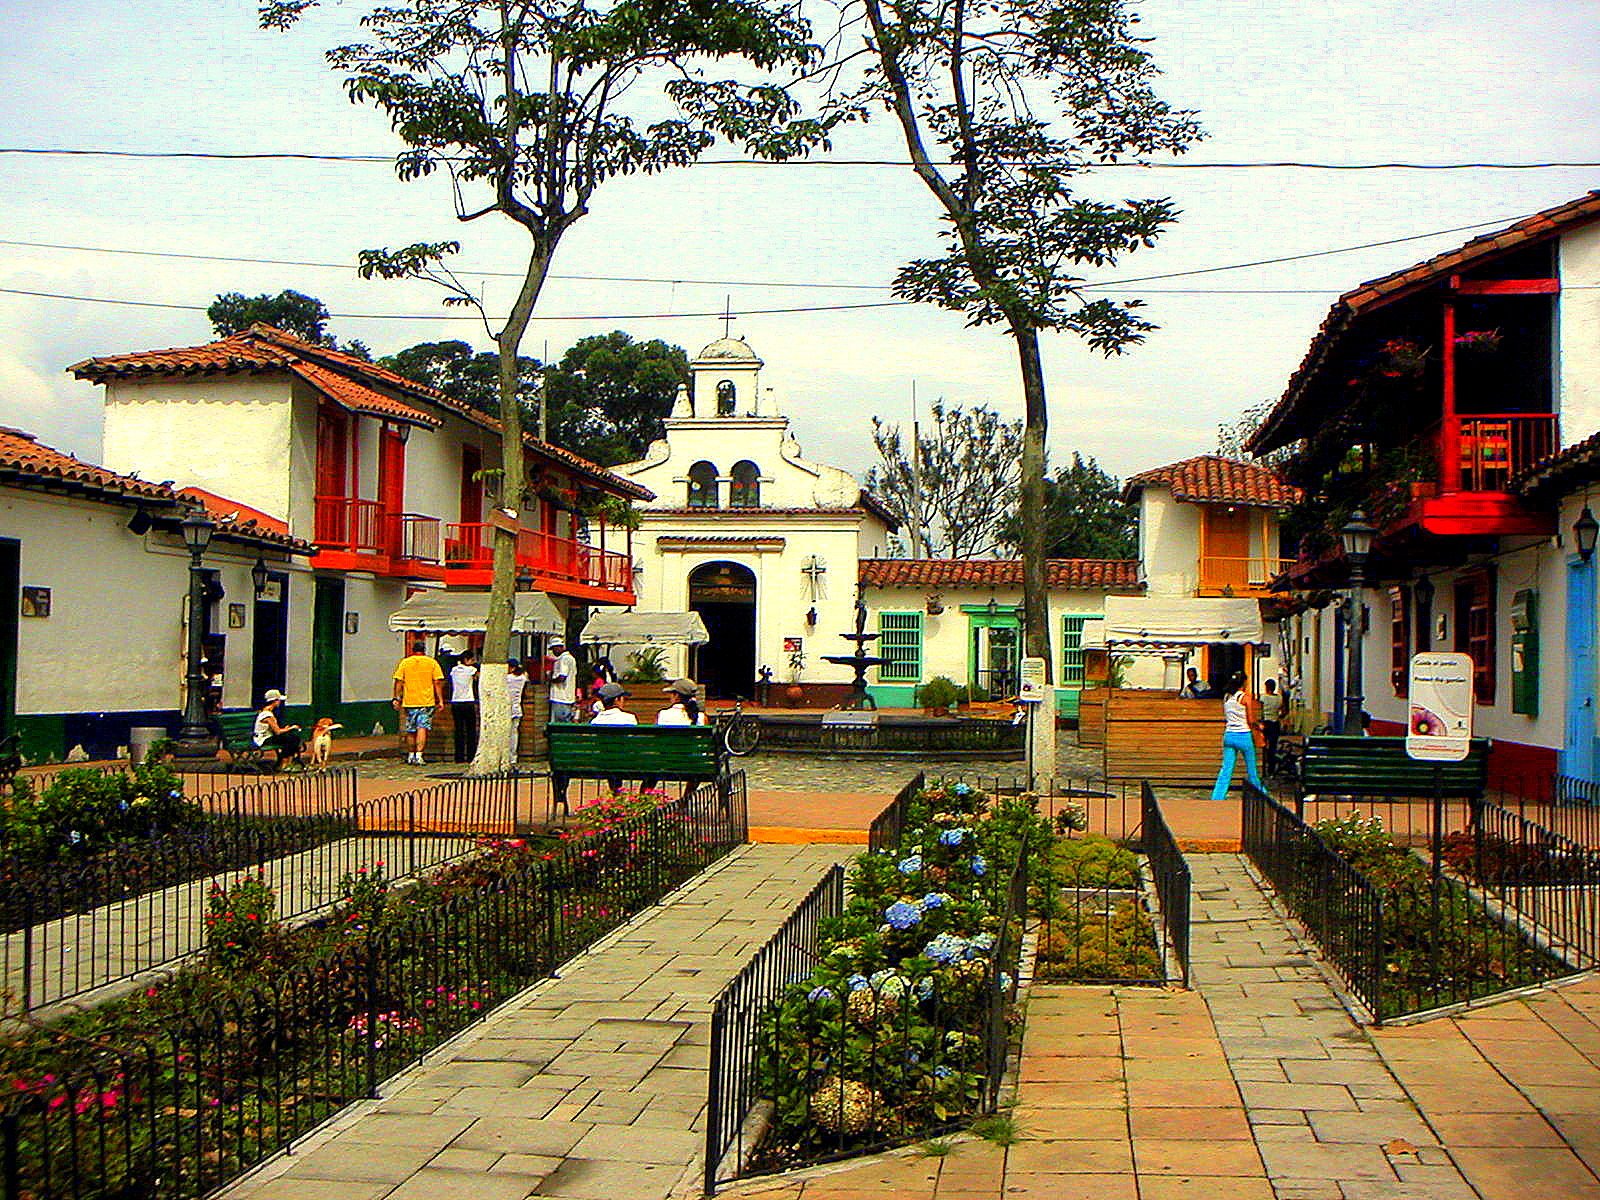 Pueblito paisa en Medellín, un lugar de arquitectura antioqueña tradicional.